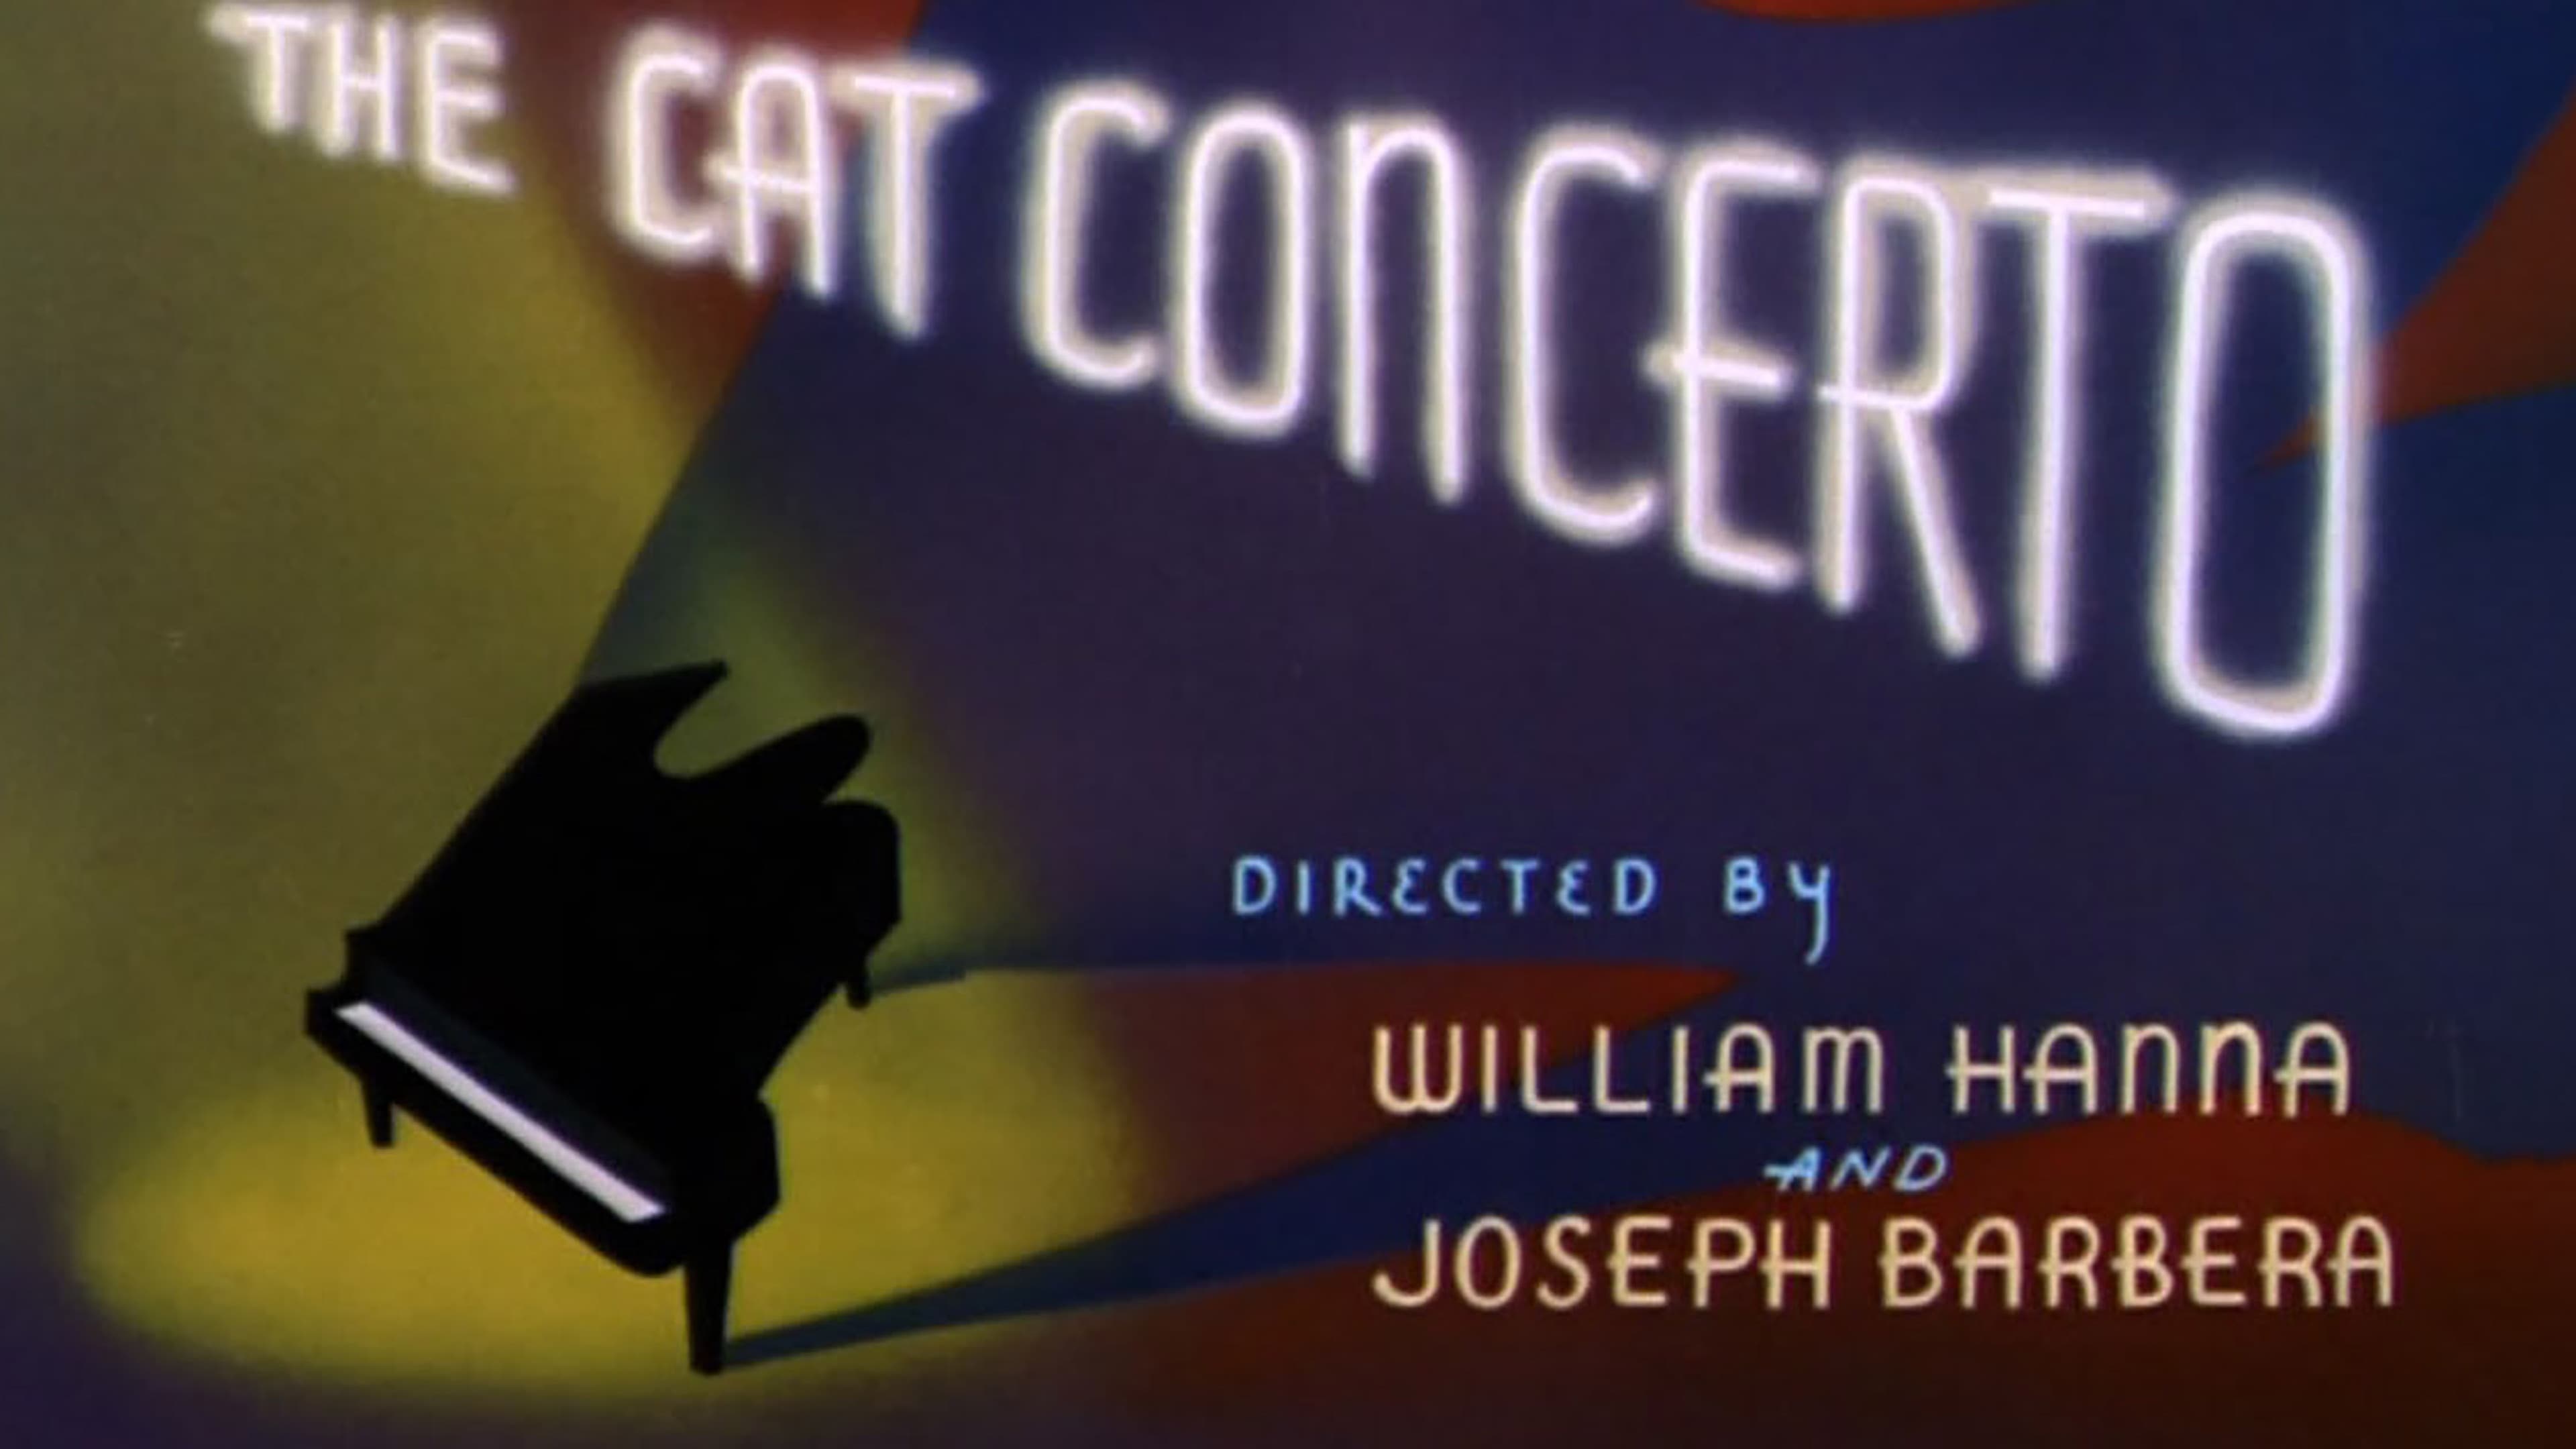 The Cat Concerto (1947)